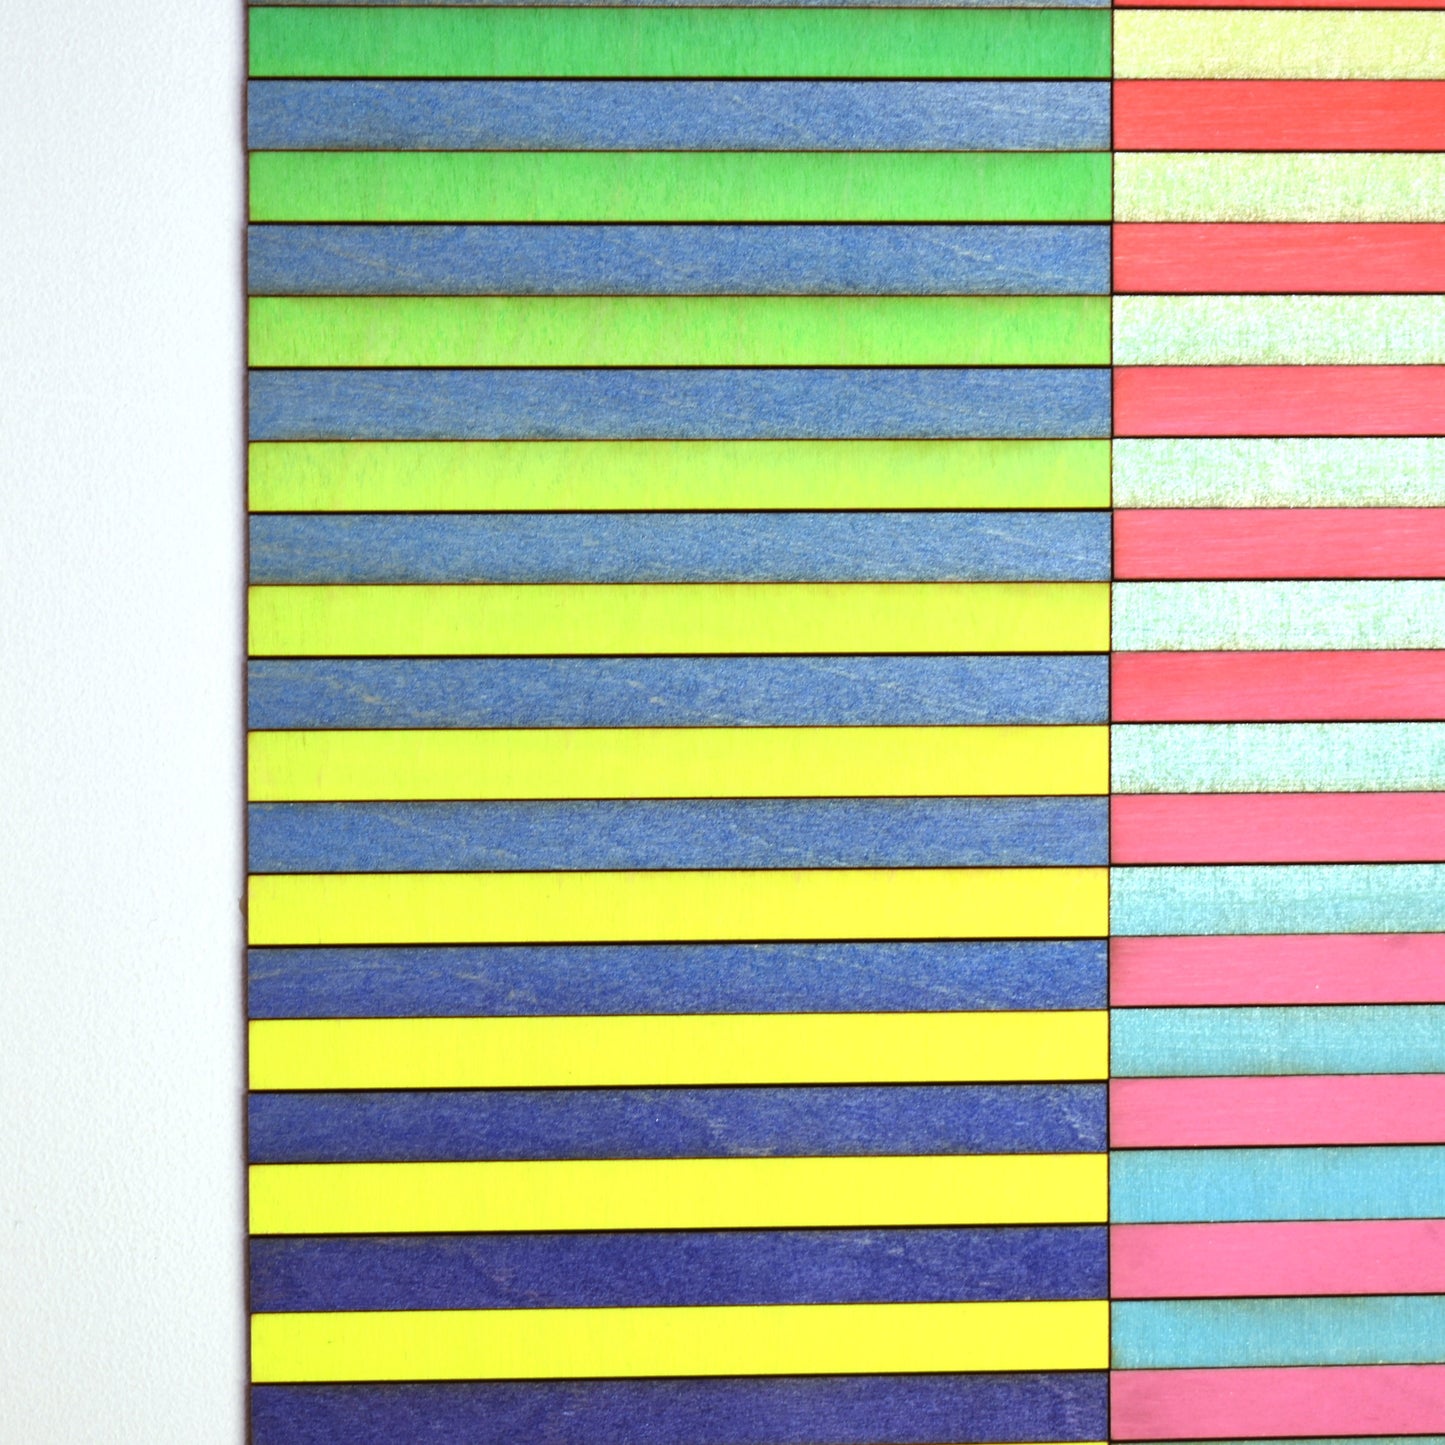 Hong Kong Stripe Colour Study Painting